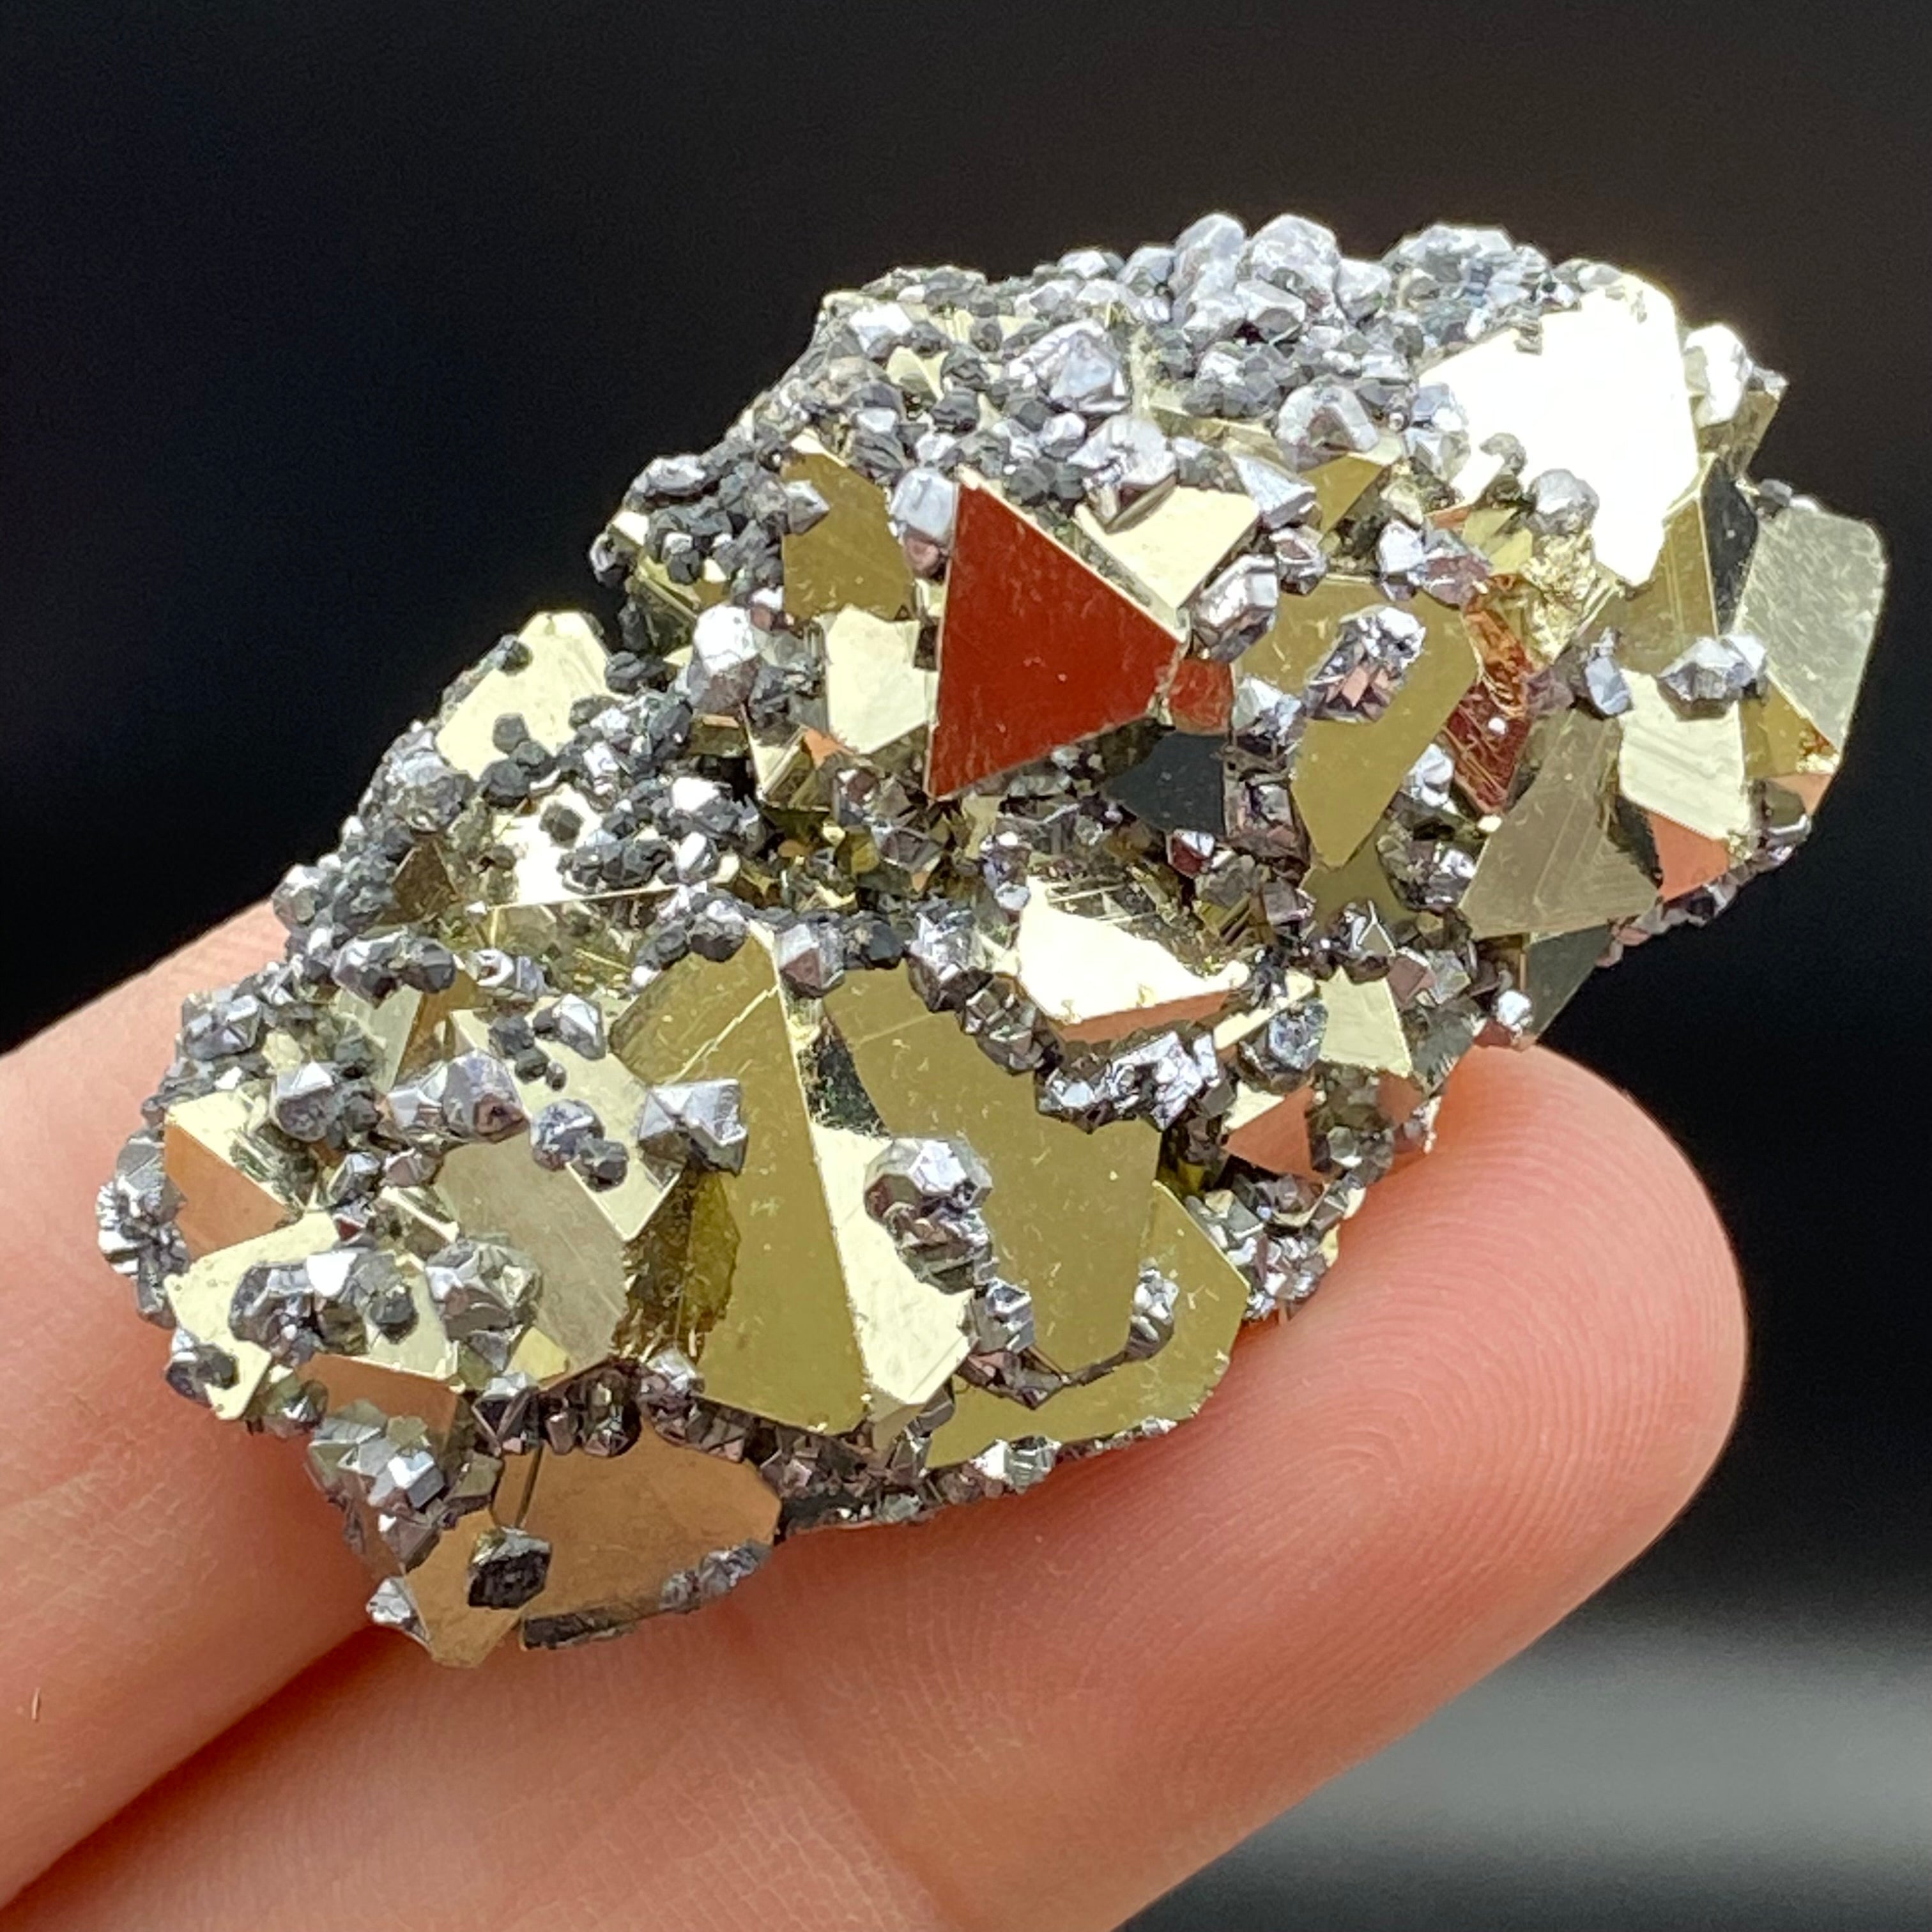 Peruvian Pyrite Crystal - 119